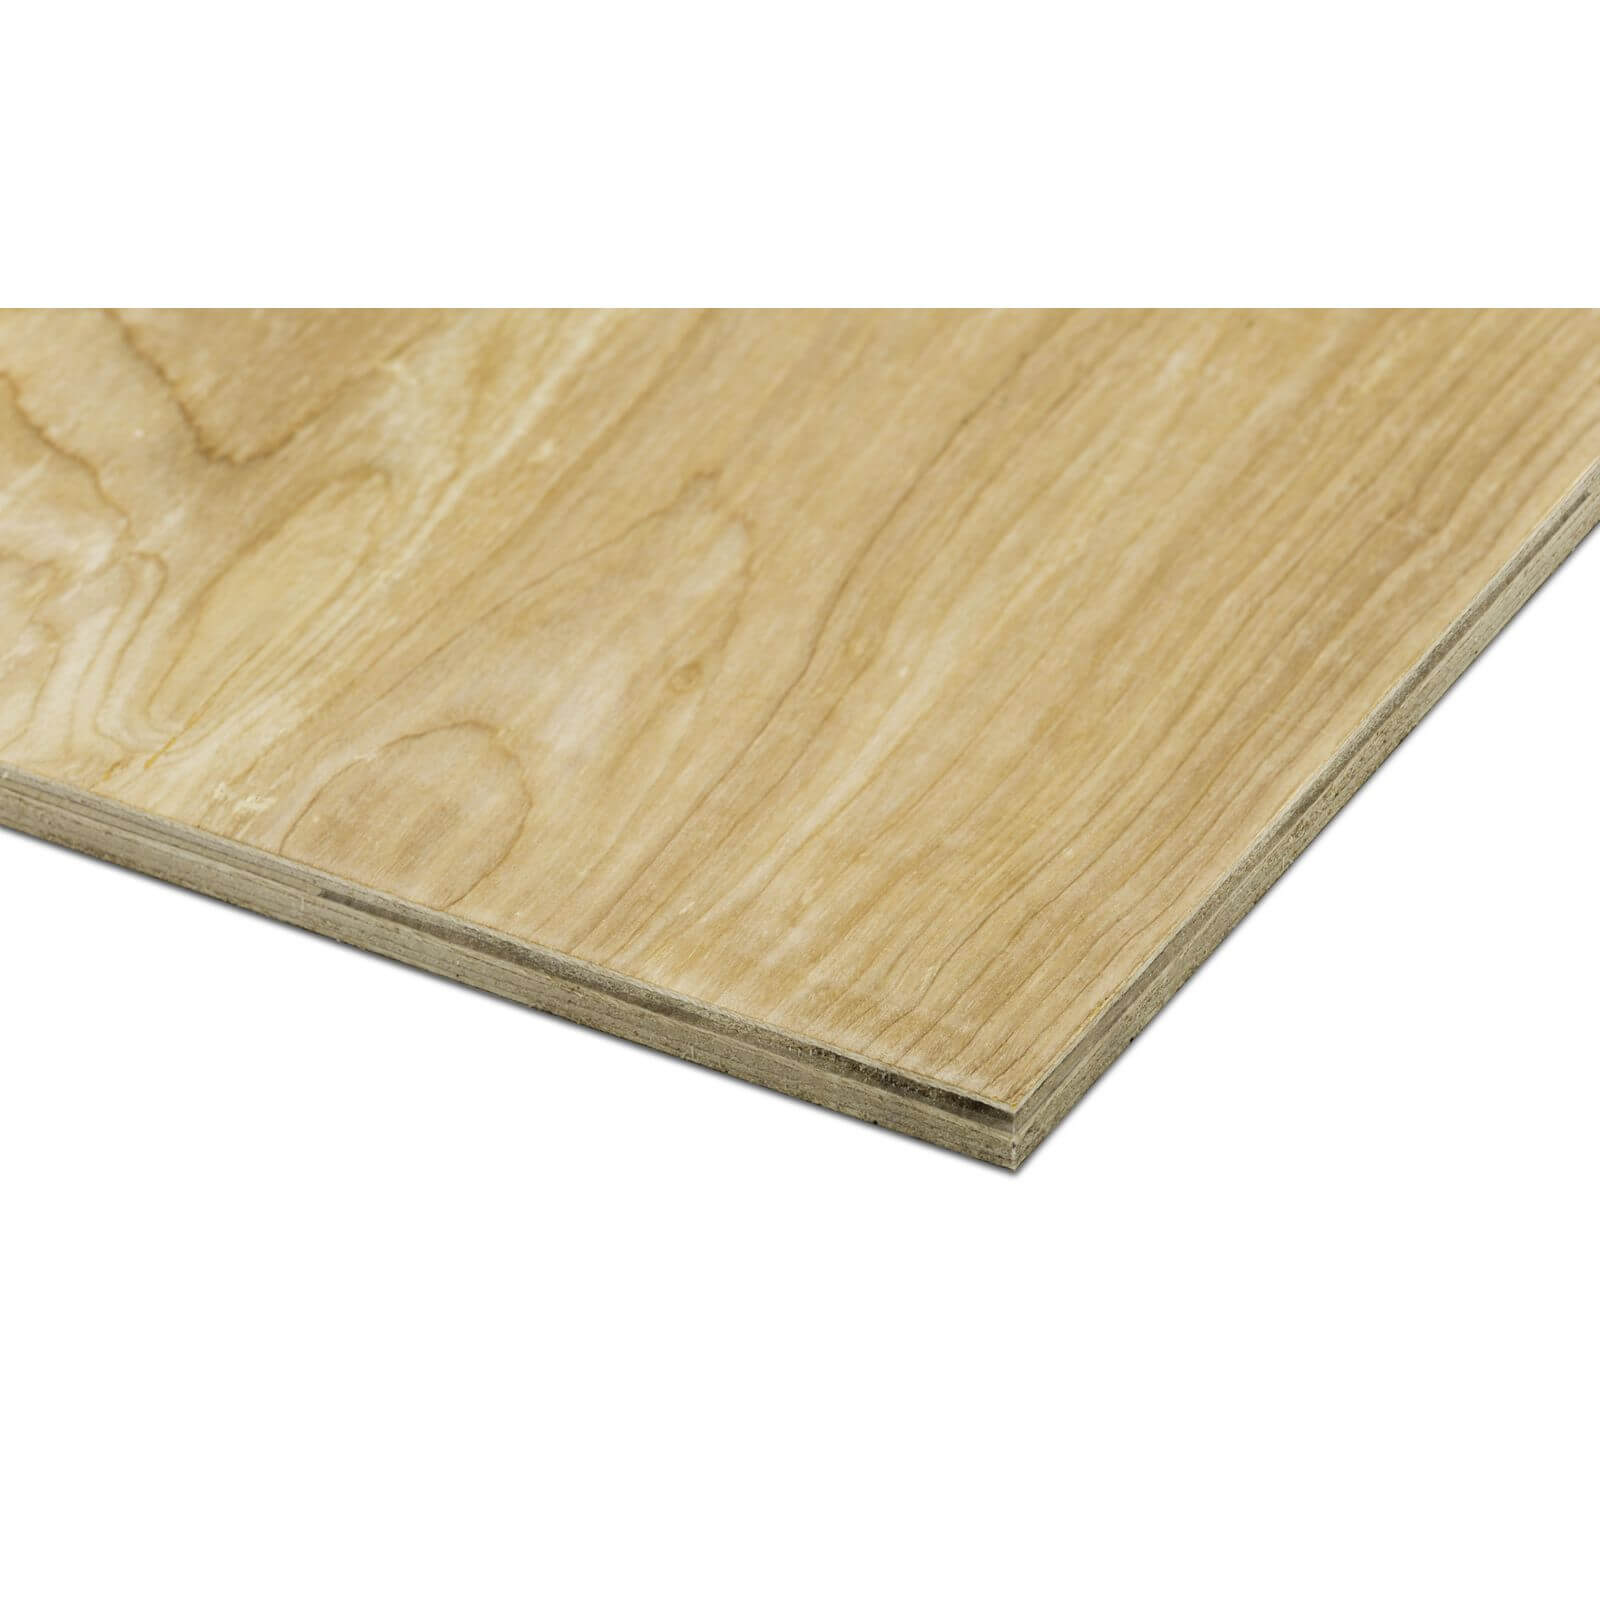 Metsa Hardwood Plywood Board 1.2m (1220 x 607 x 12mm)